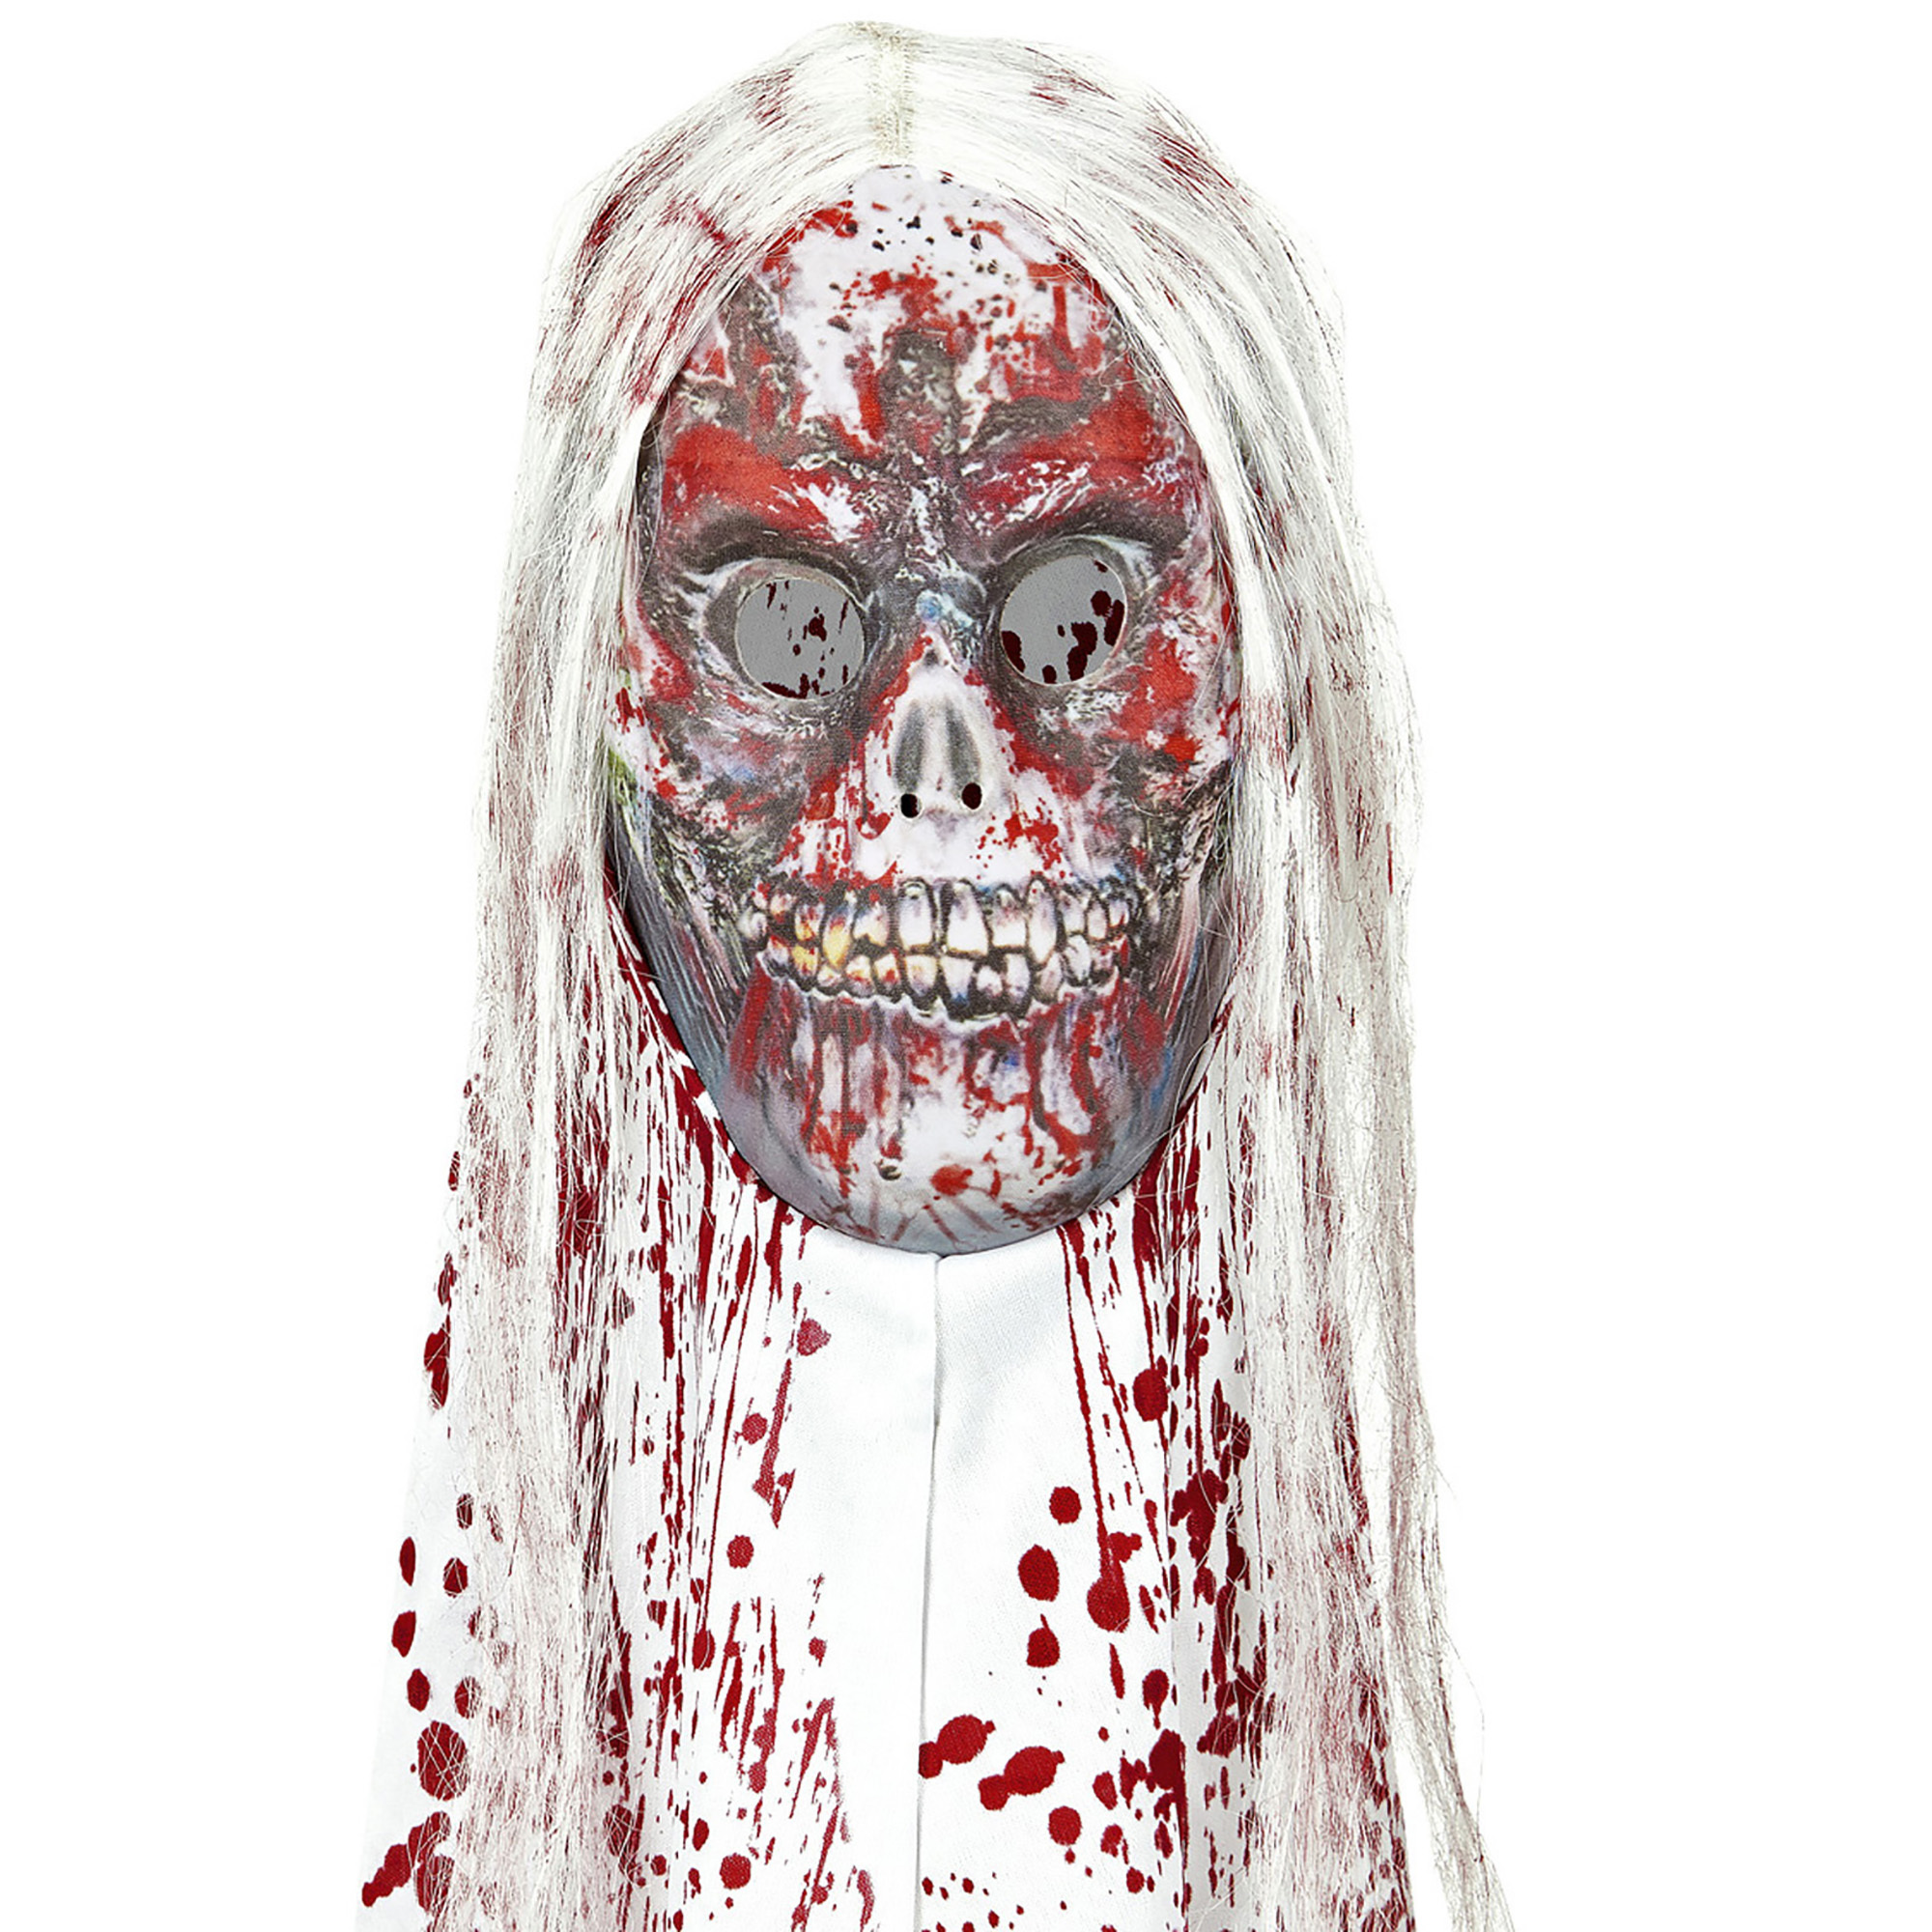 Bloederig zombie masker met haar en bloederige kap